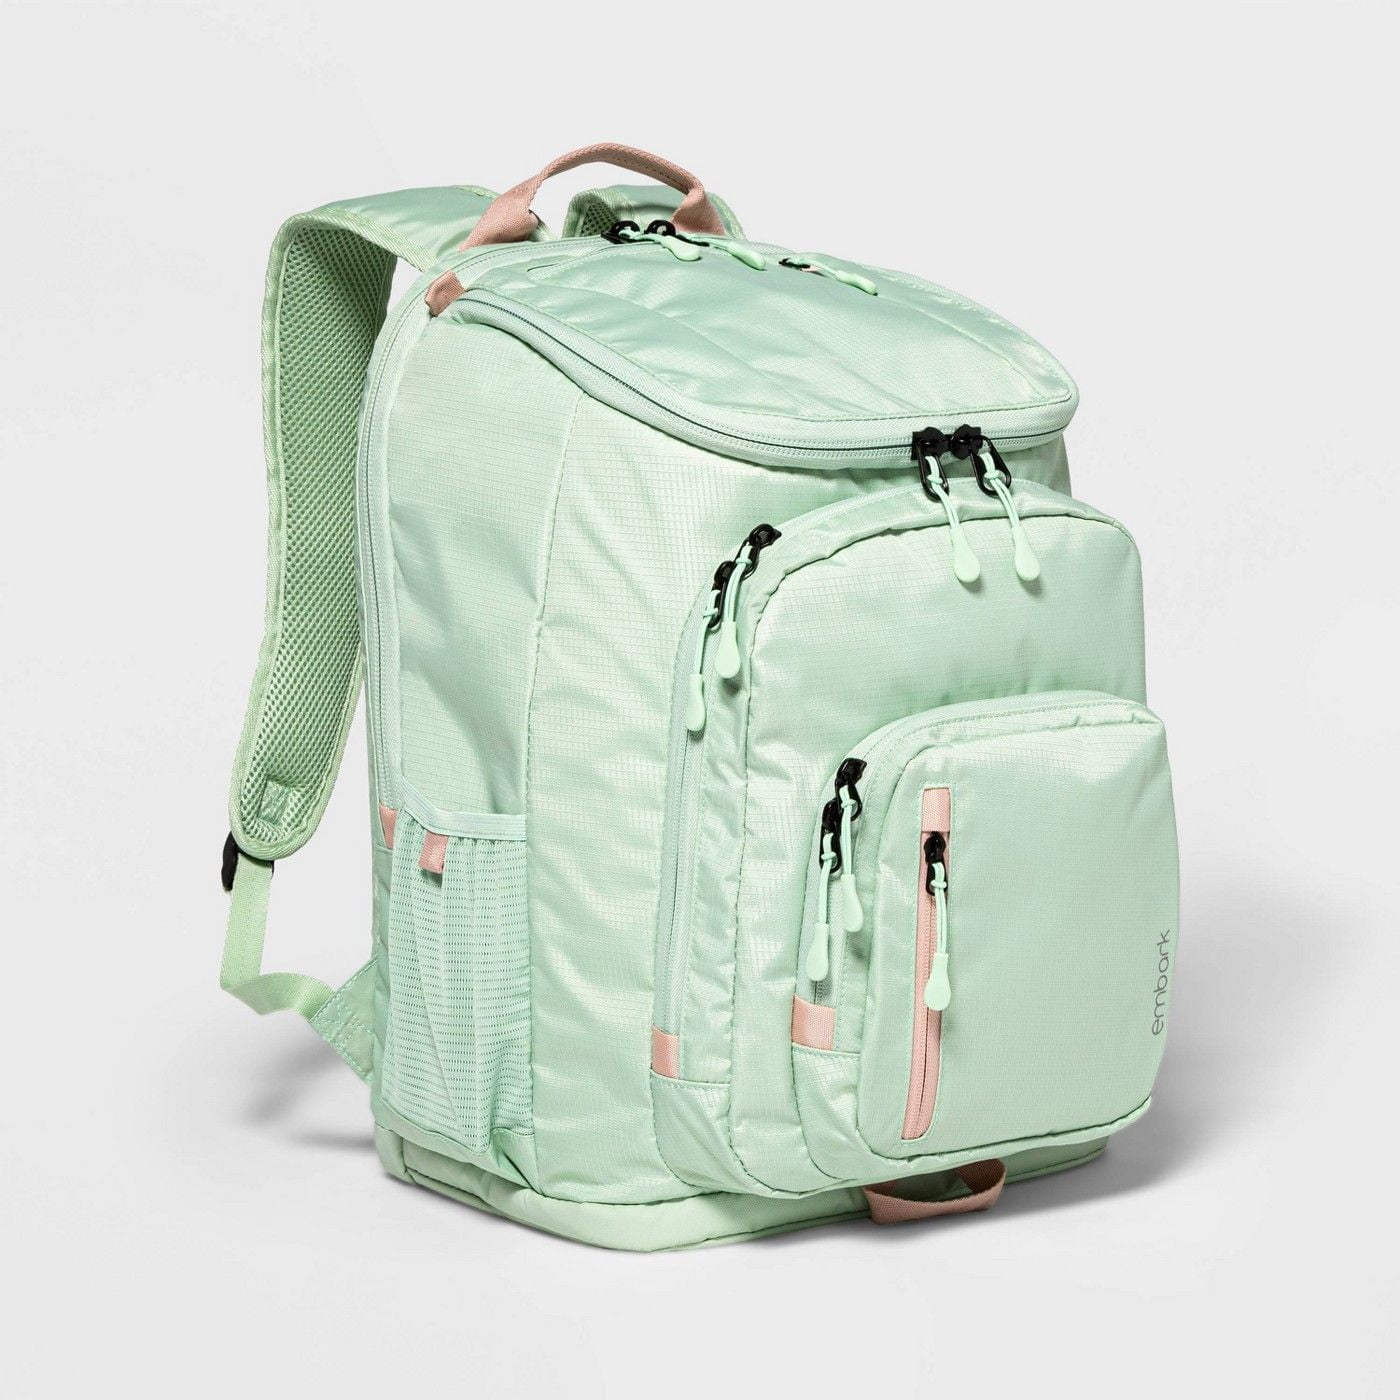 Embark Adjustable Shoulder Straps and Web Handle Jartop Backpack, 19  Inches, Mint/Pink